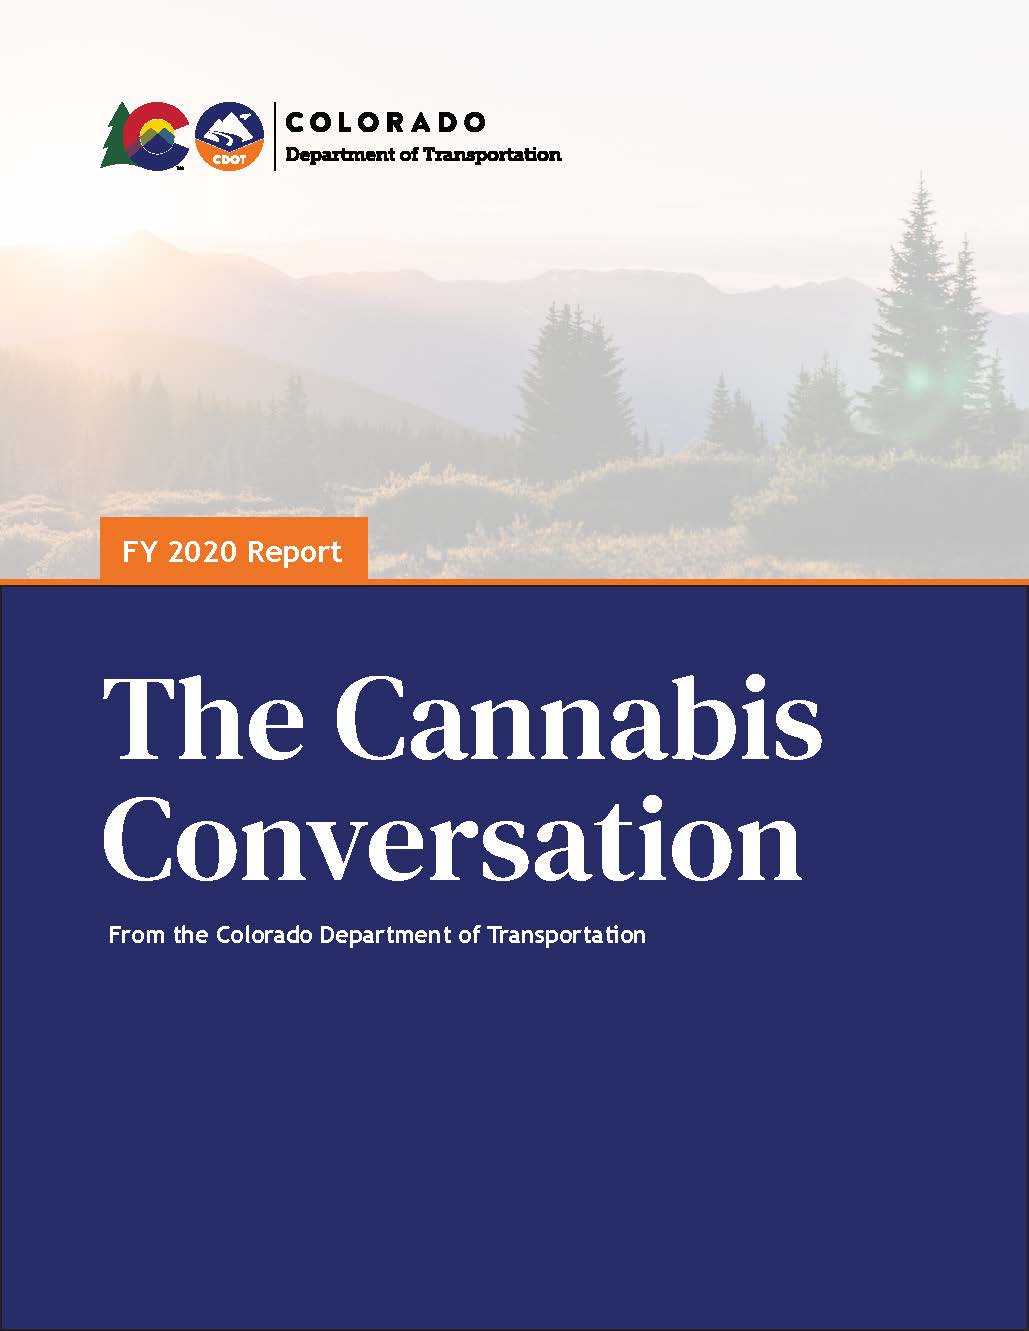 cannabis-conversation-report_April 2020 cover.jpg detail image